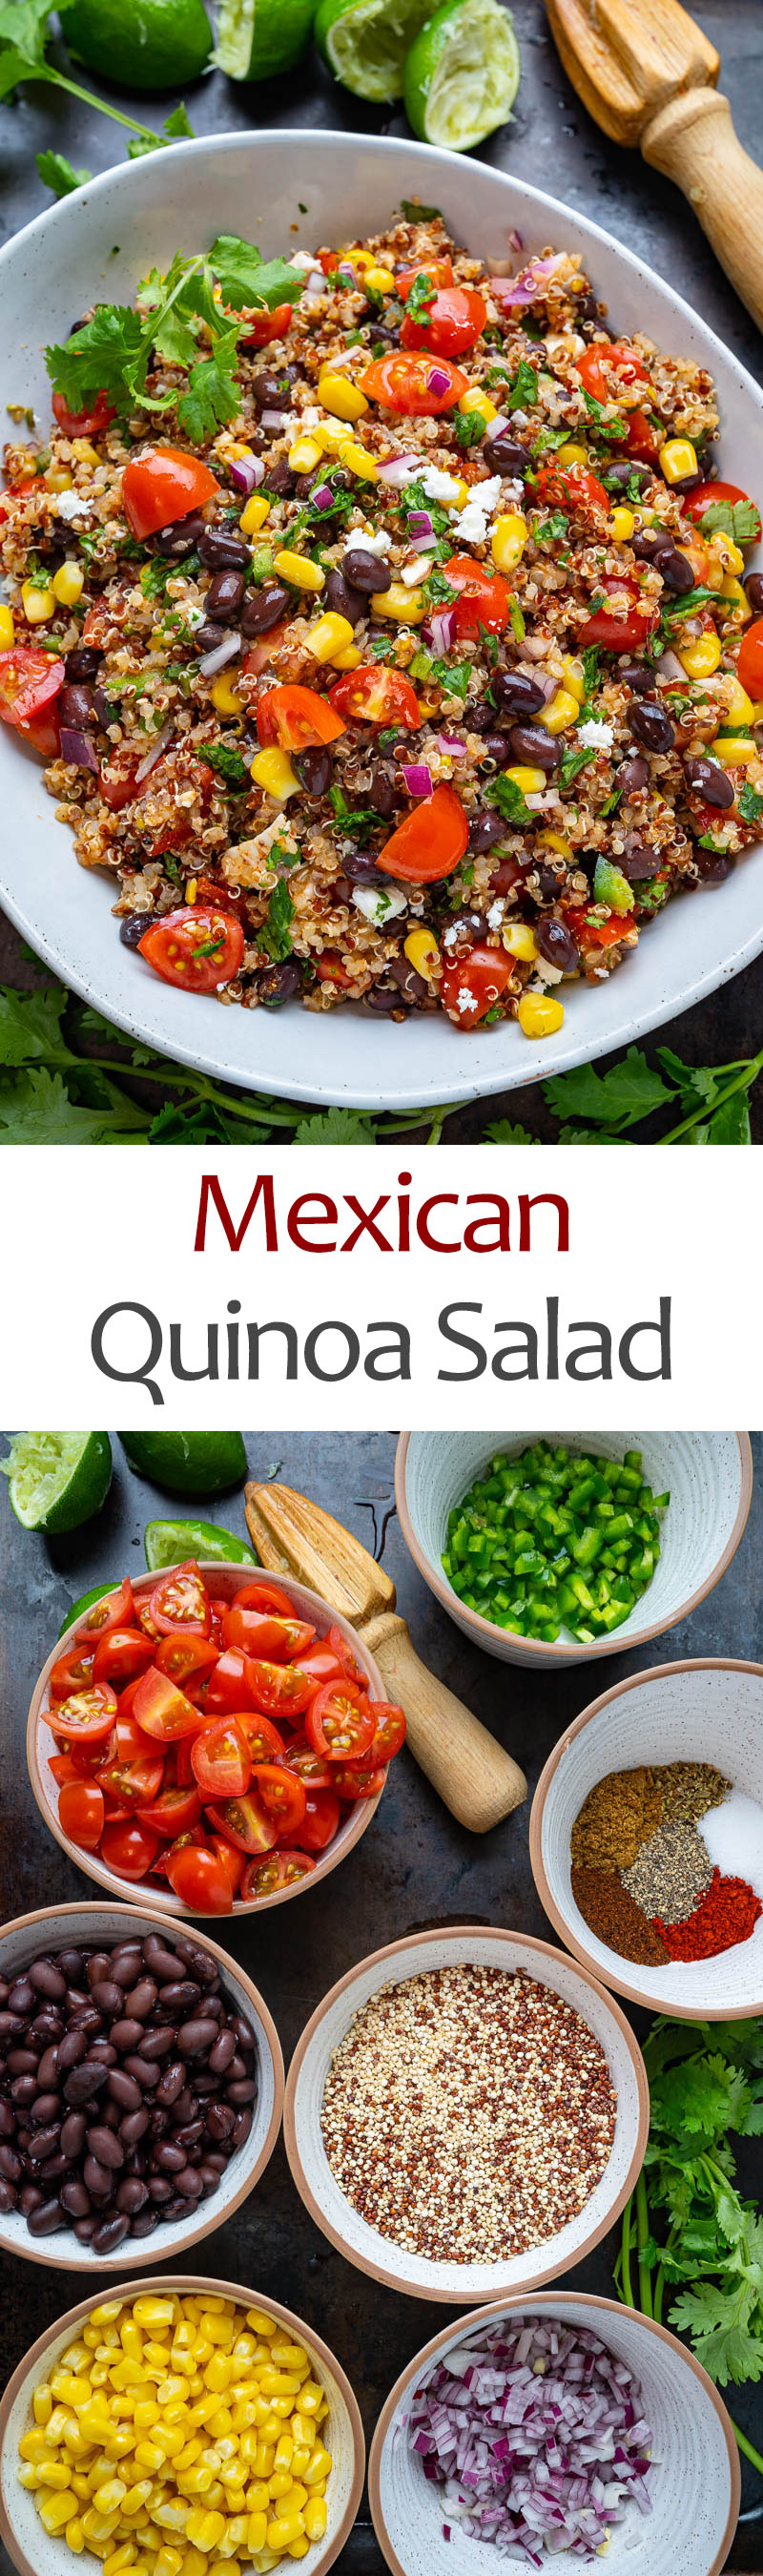 Ensalada de quinoa mexicana